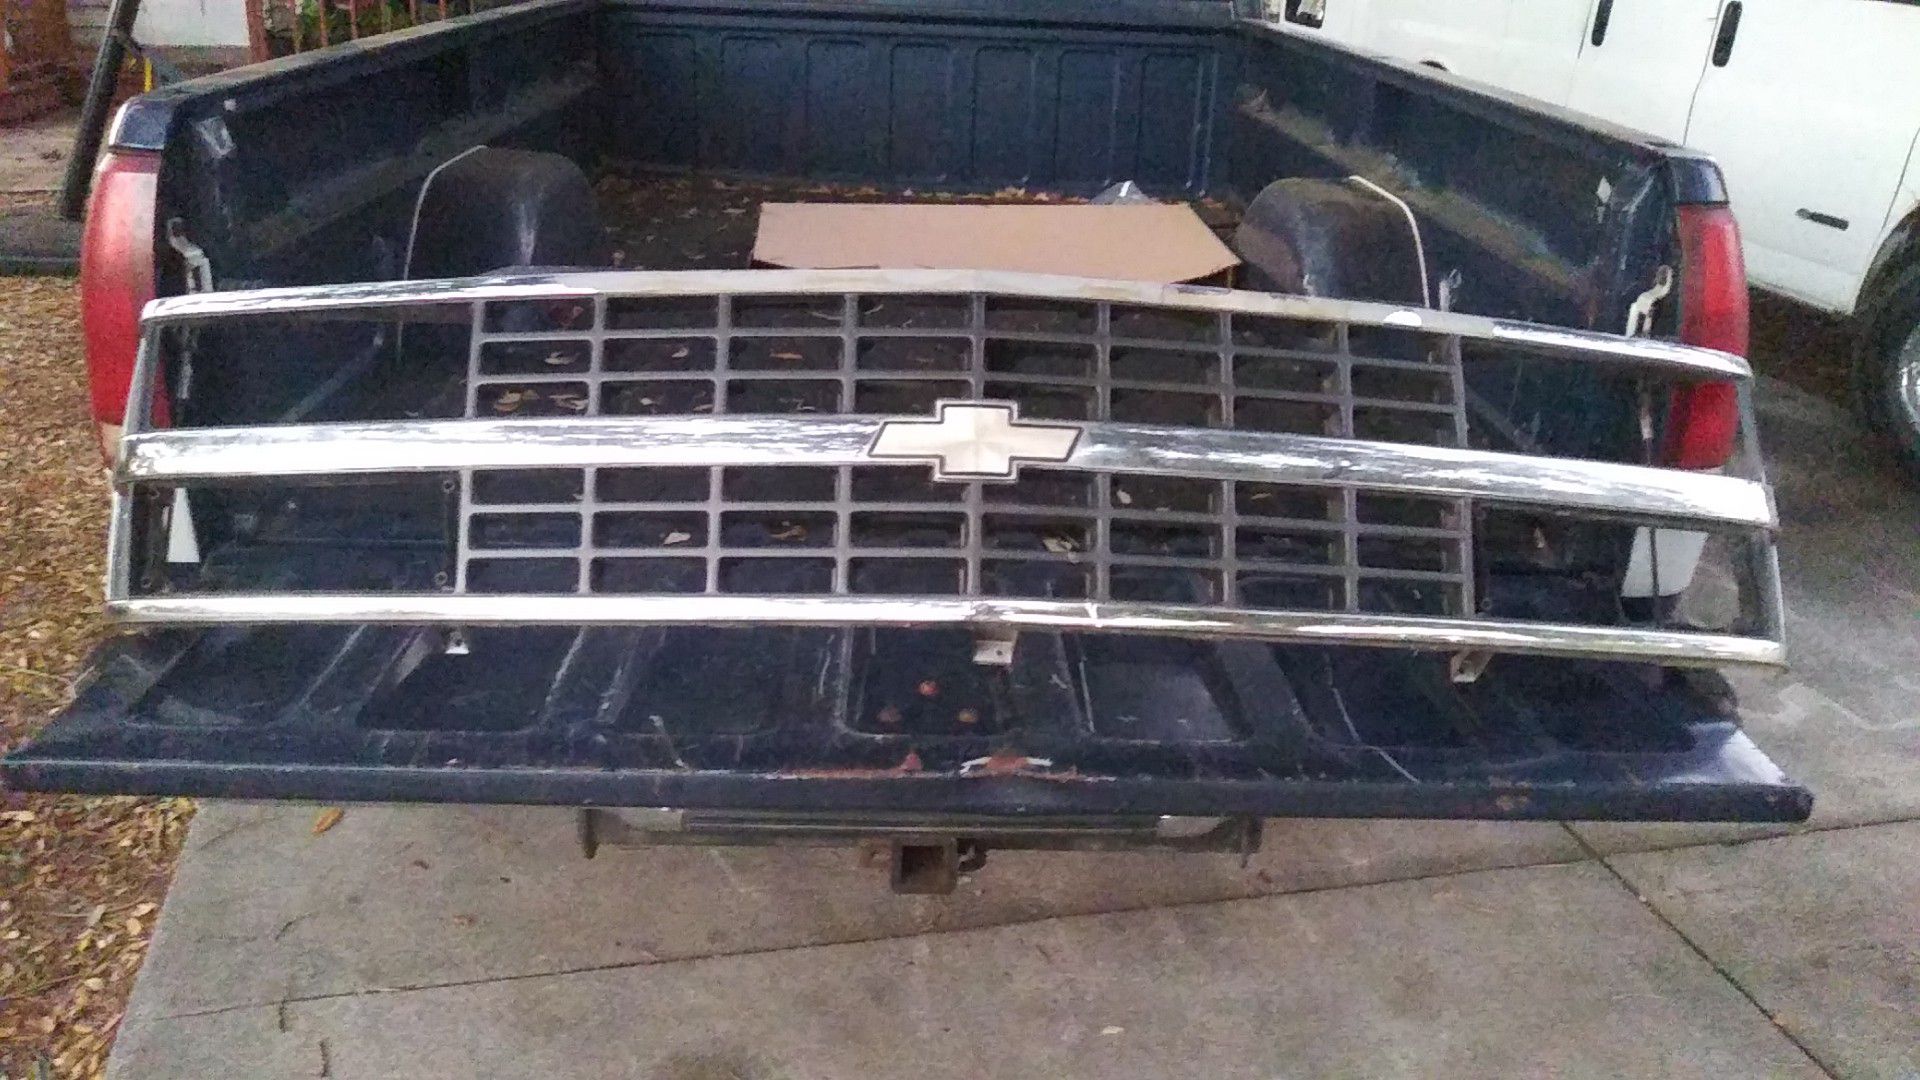 93 Chevy Silverado C 1500 front grill minor wear and tear but all intact no broken parts